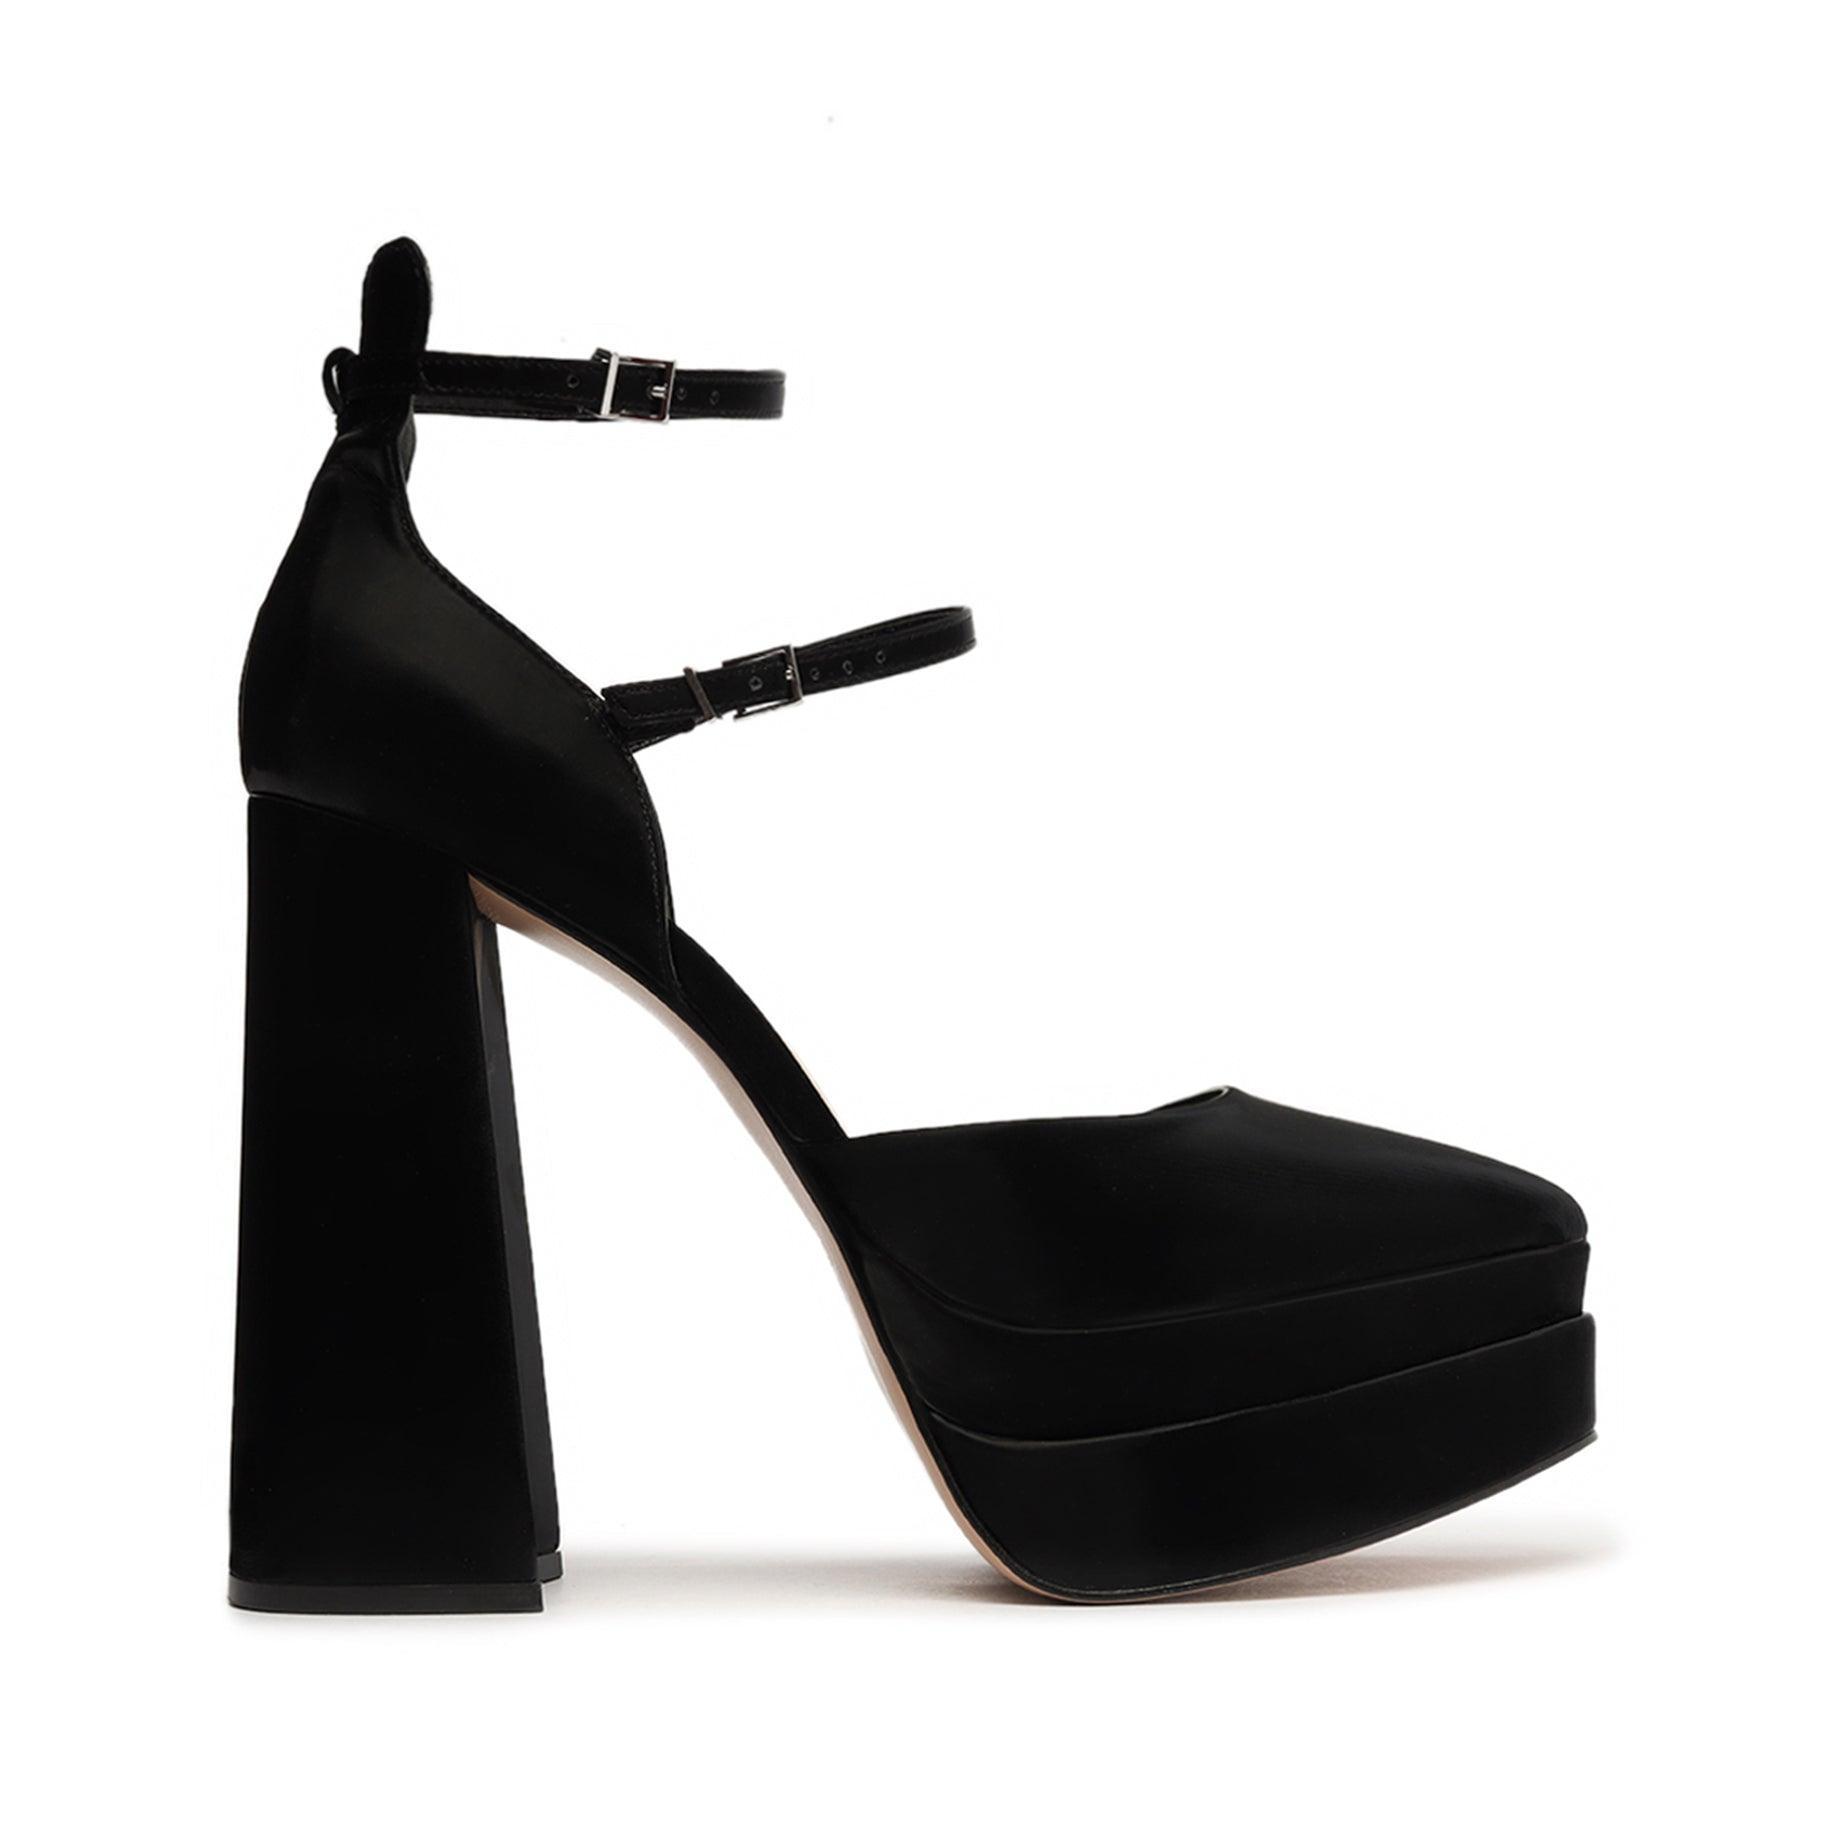 Schutz Elysee (Black) Women's Shoes Product Image